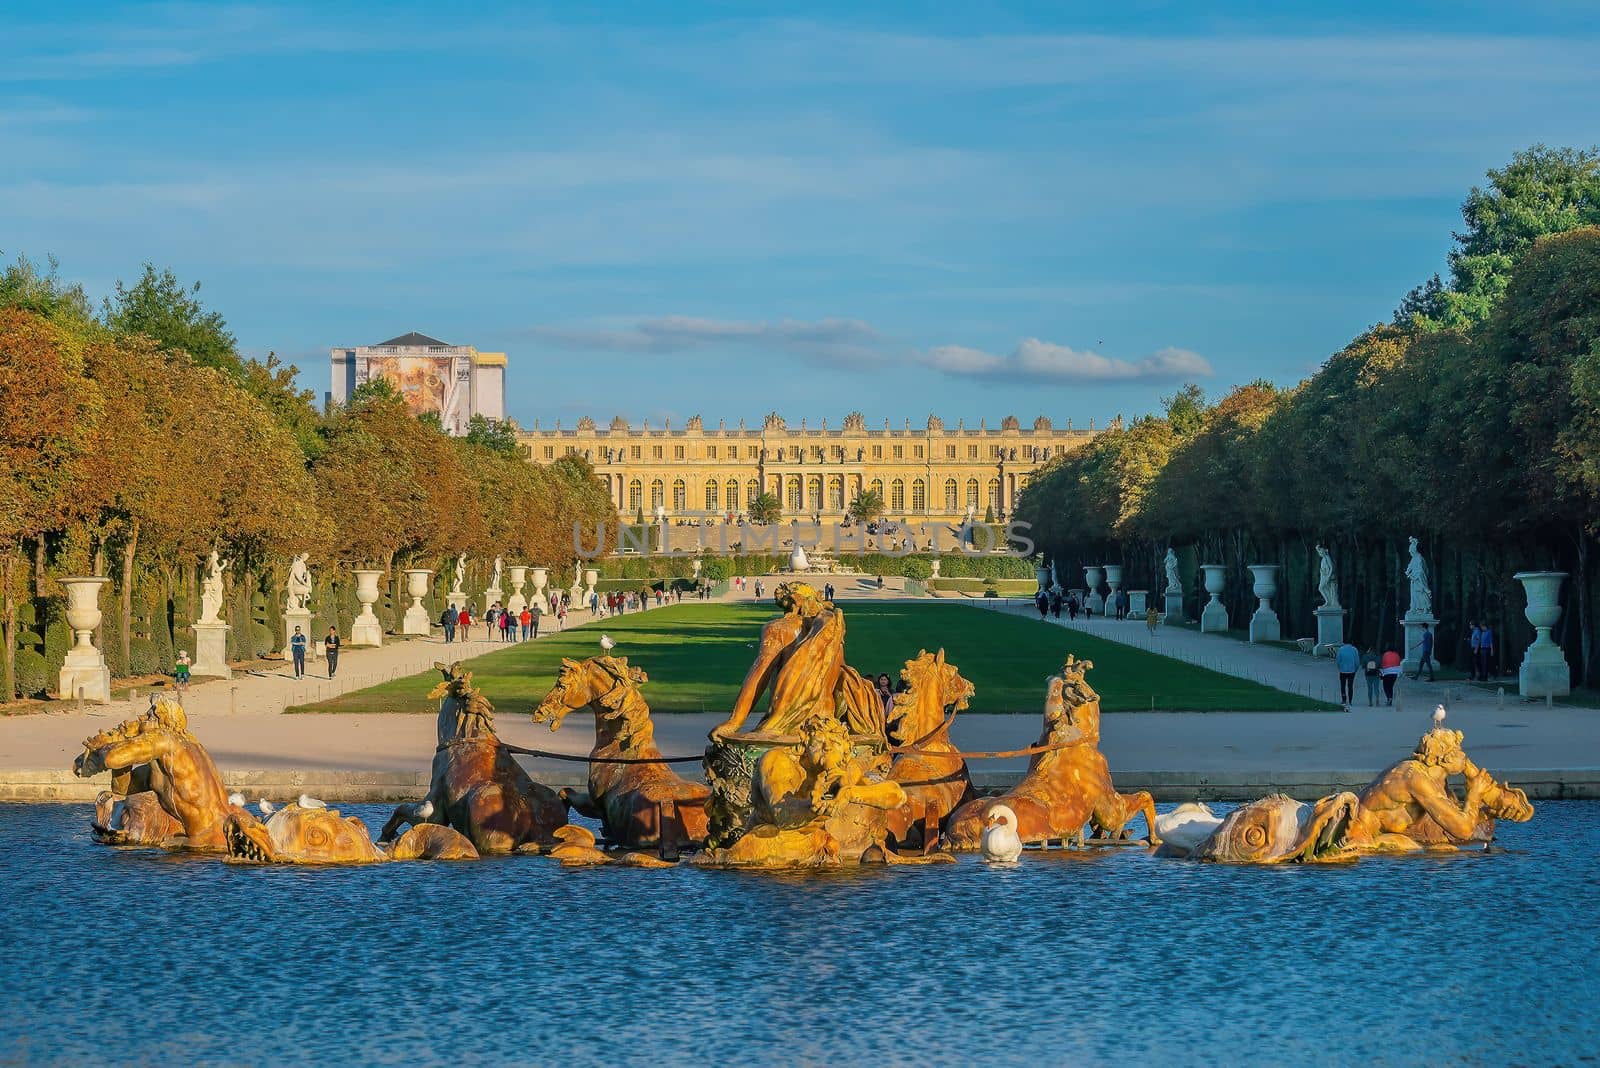 Garden of Chateau de Versailles, near Paris in France by f11photo